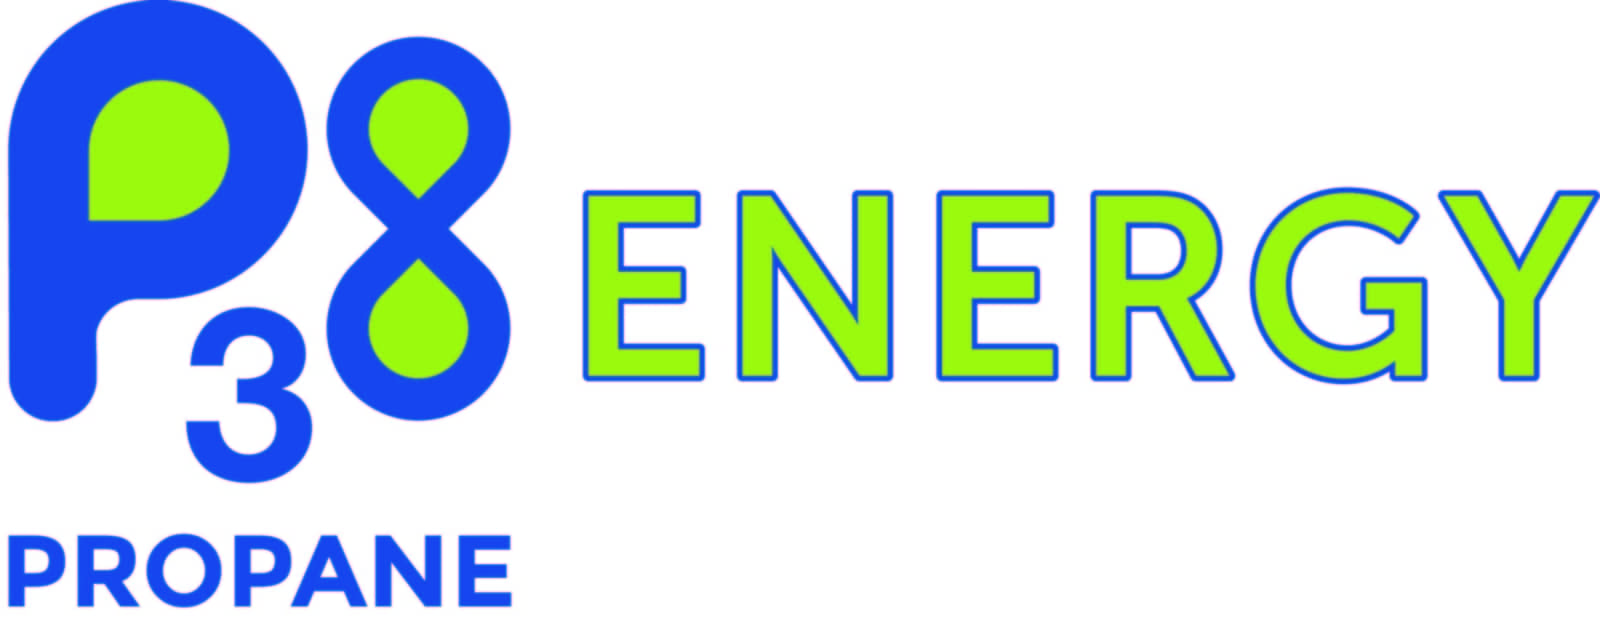 logo - P38 Energy 